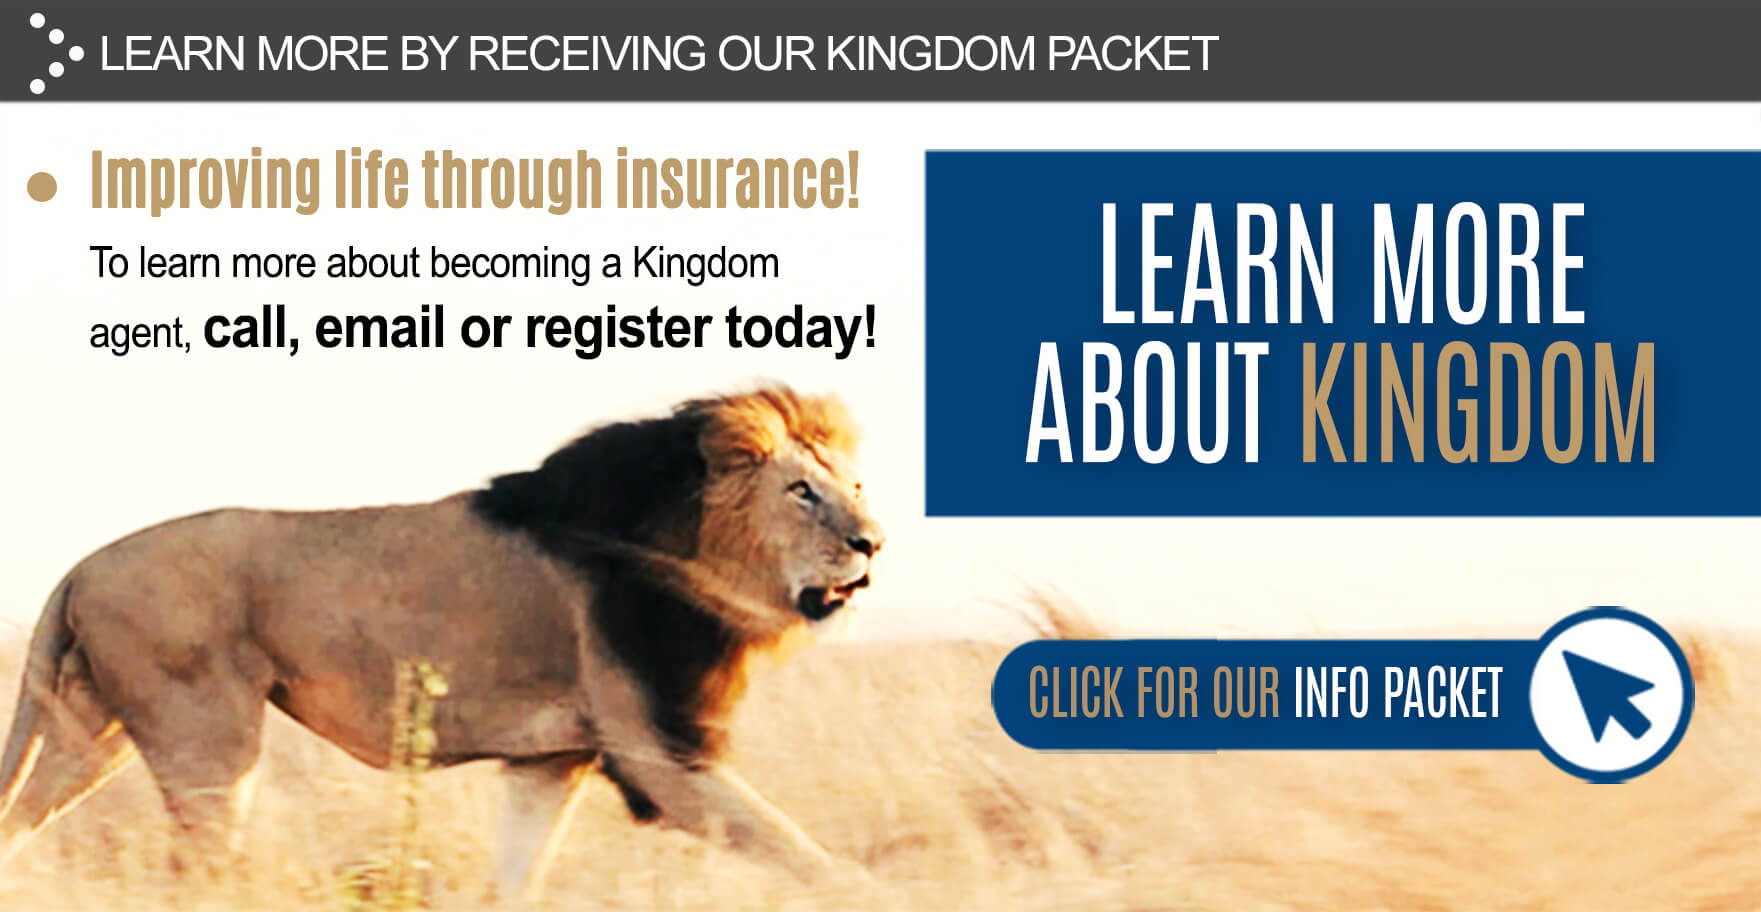 Get the Kingdom information packet!